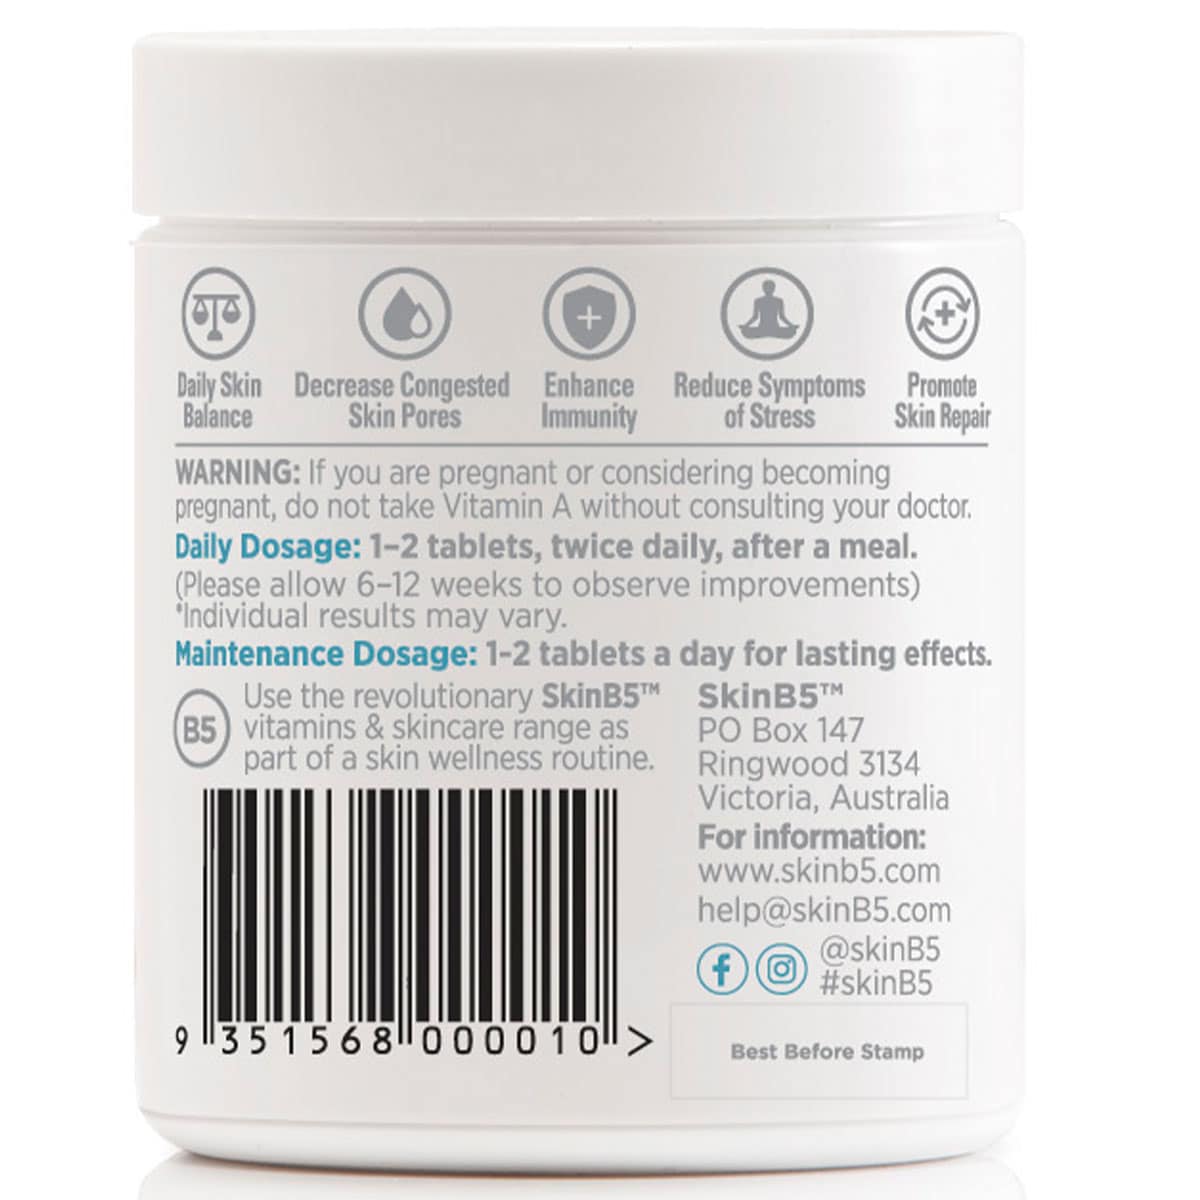 SkinB5 Extra Strength Acne Control Vitamins 60 Tablets